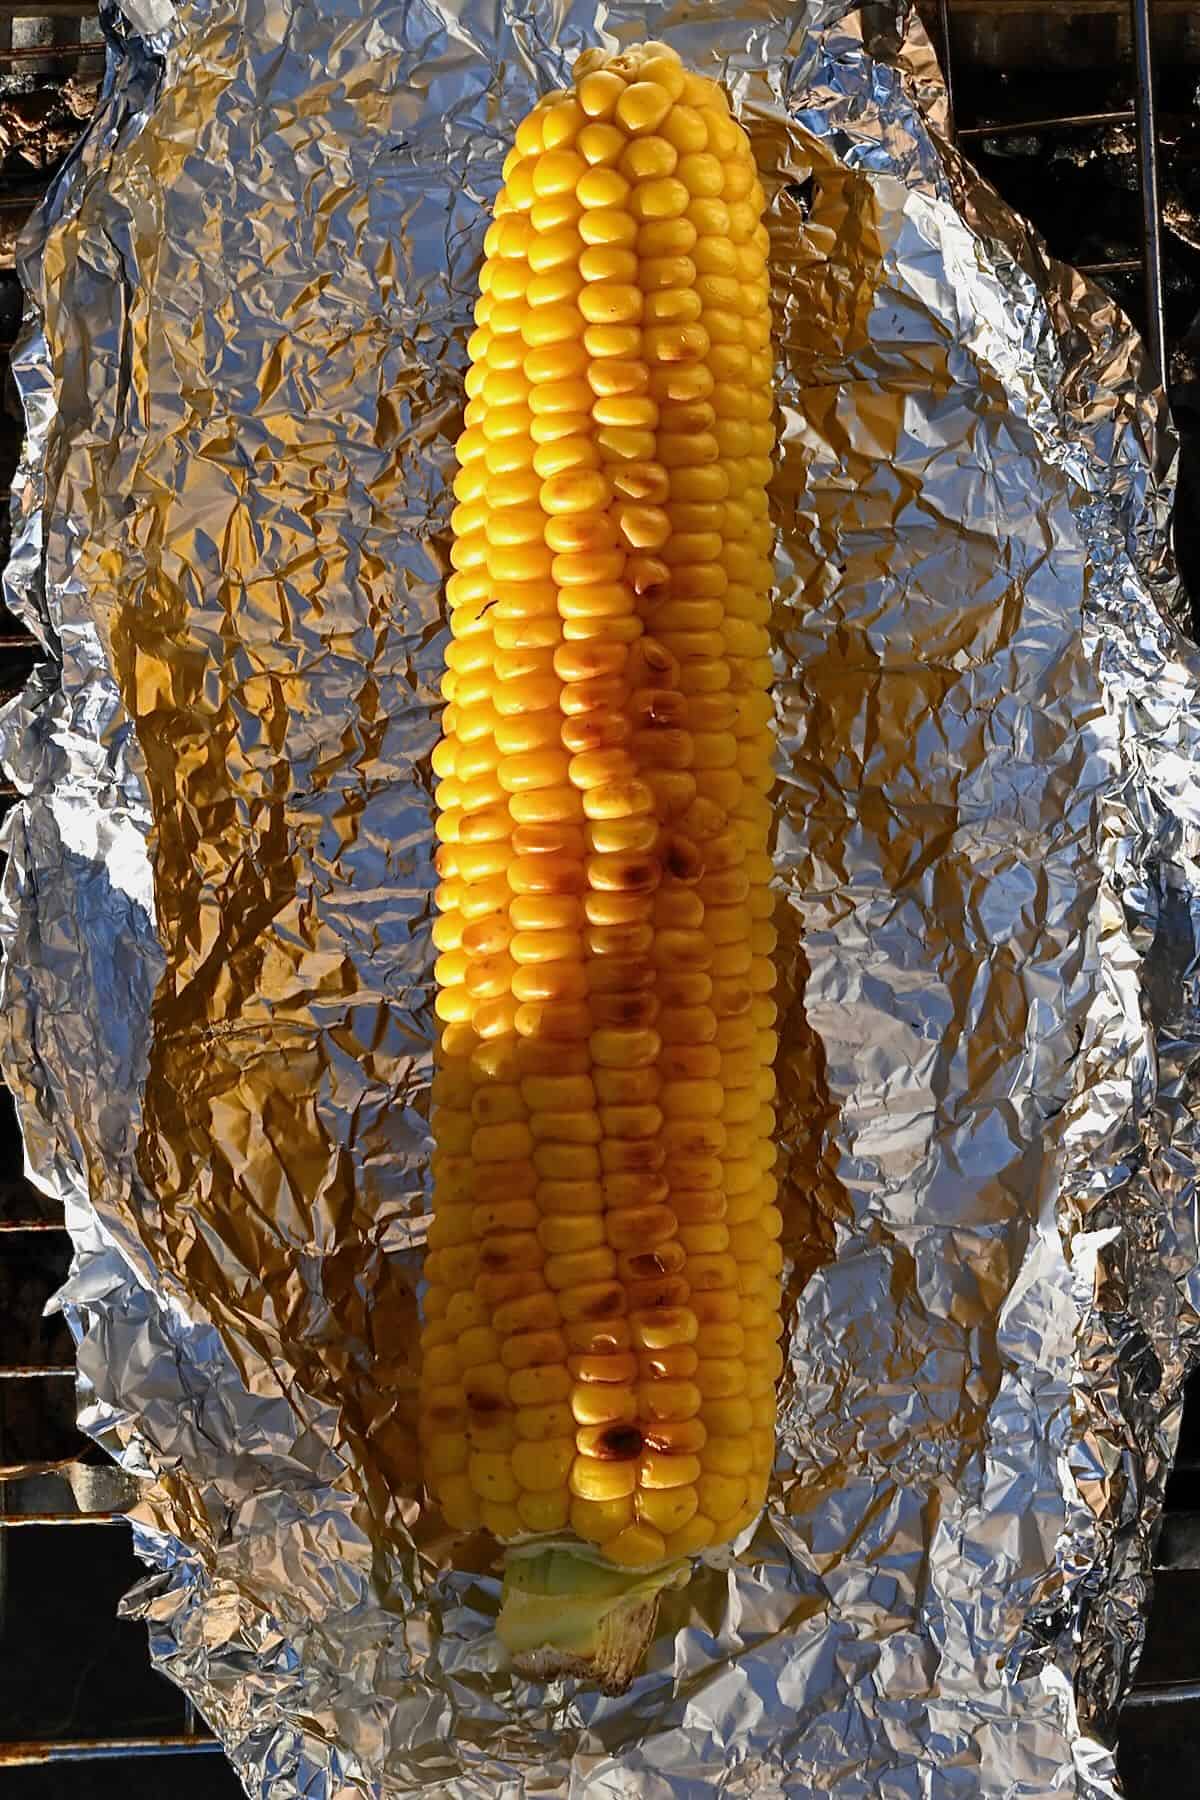 Grilling corn in the cob in foil